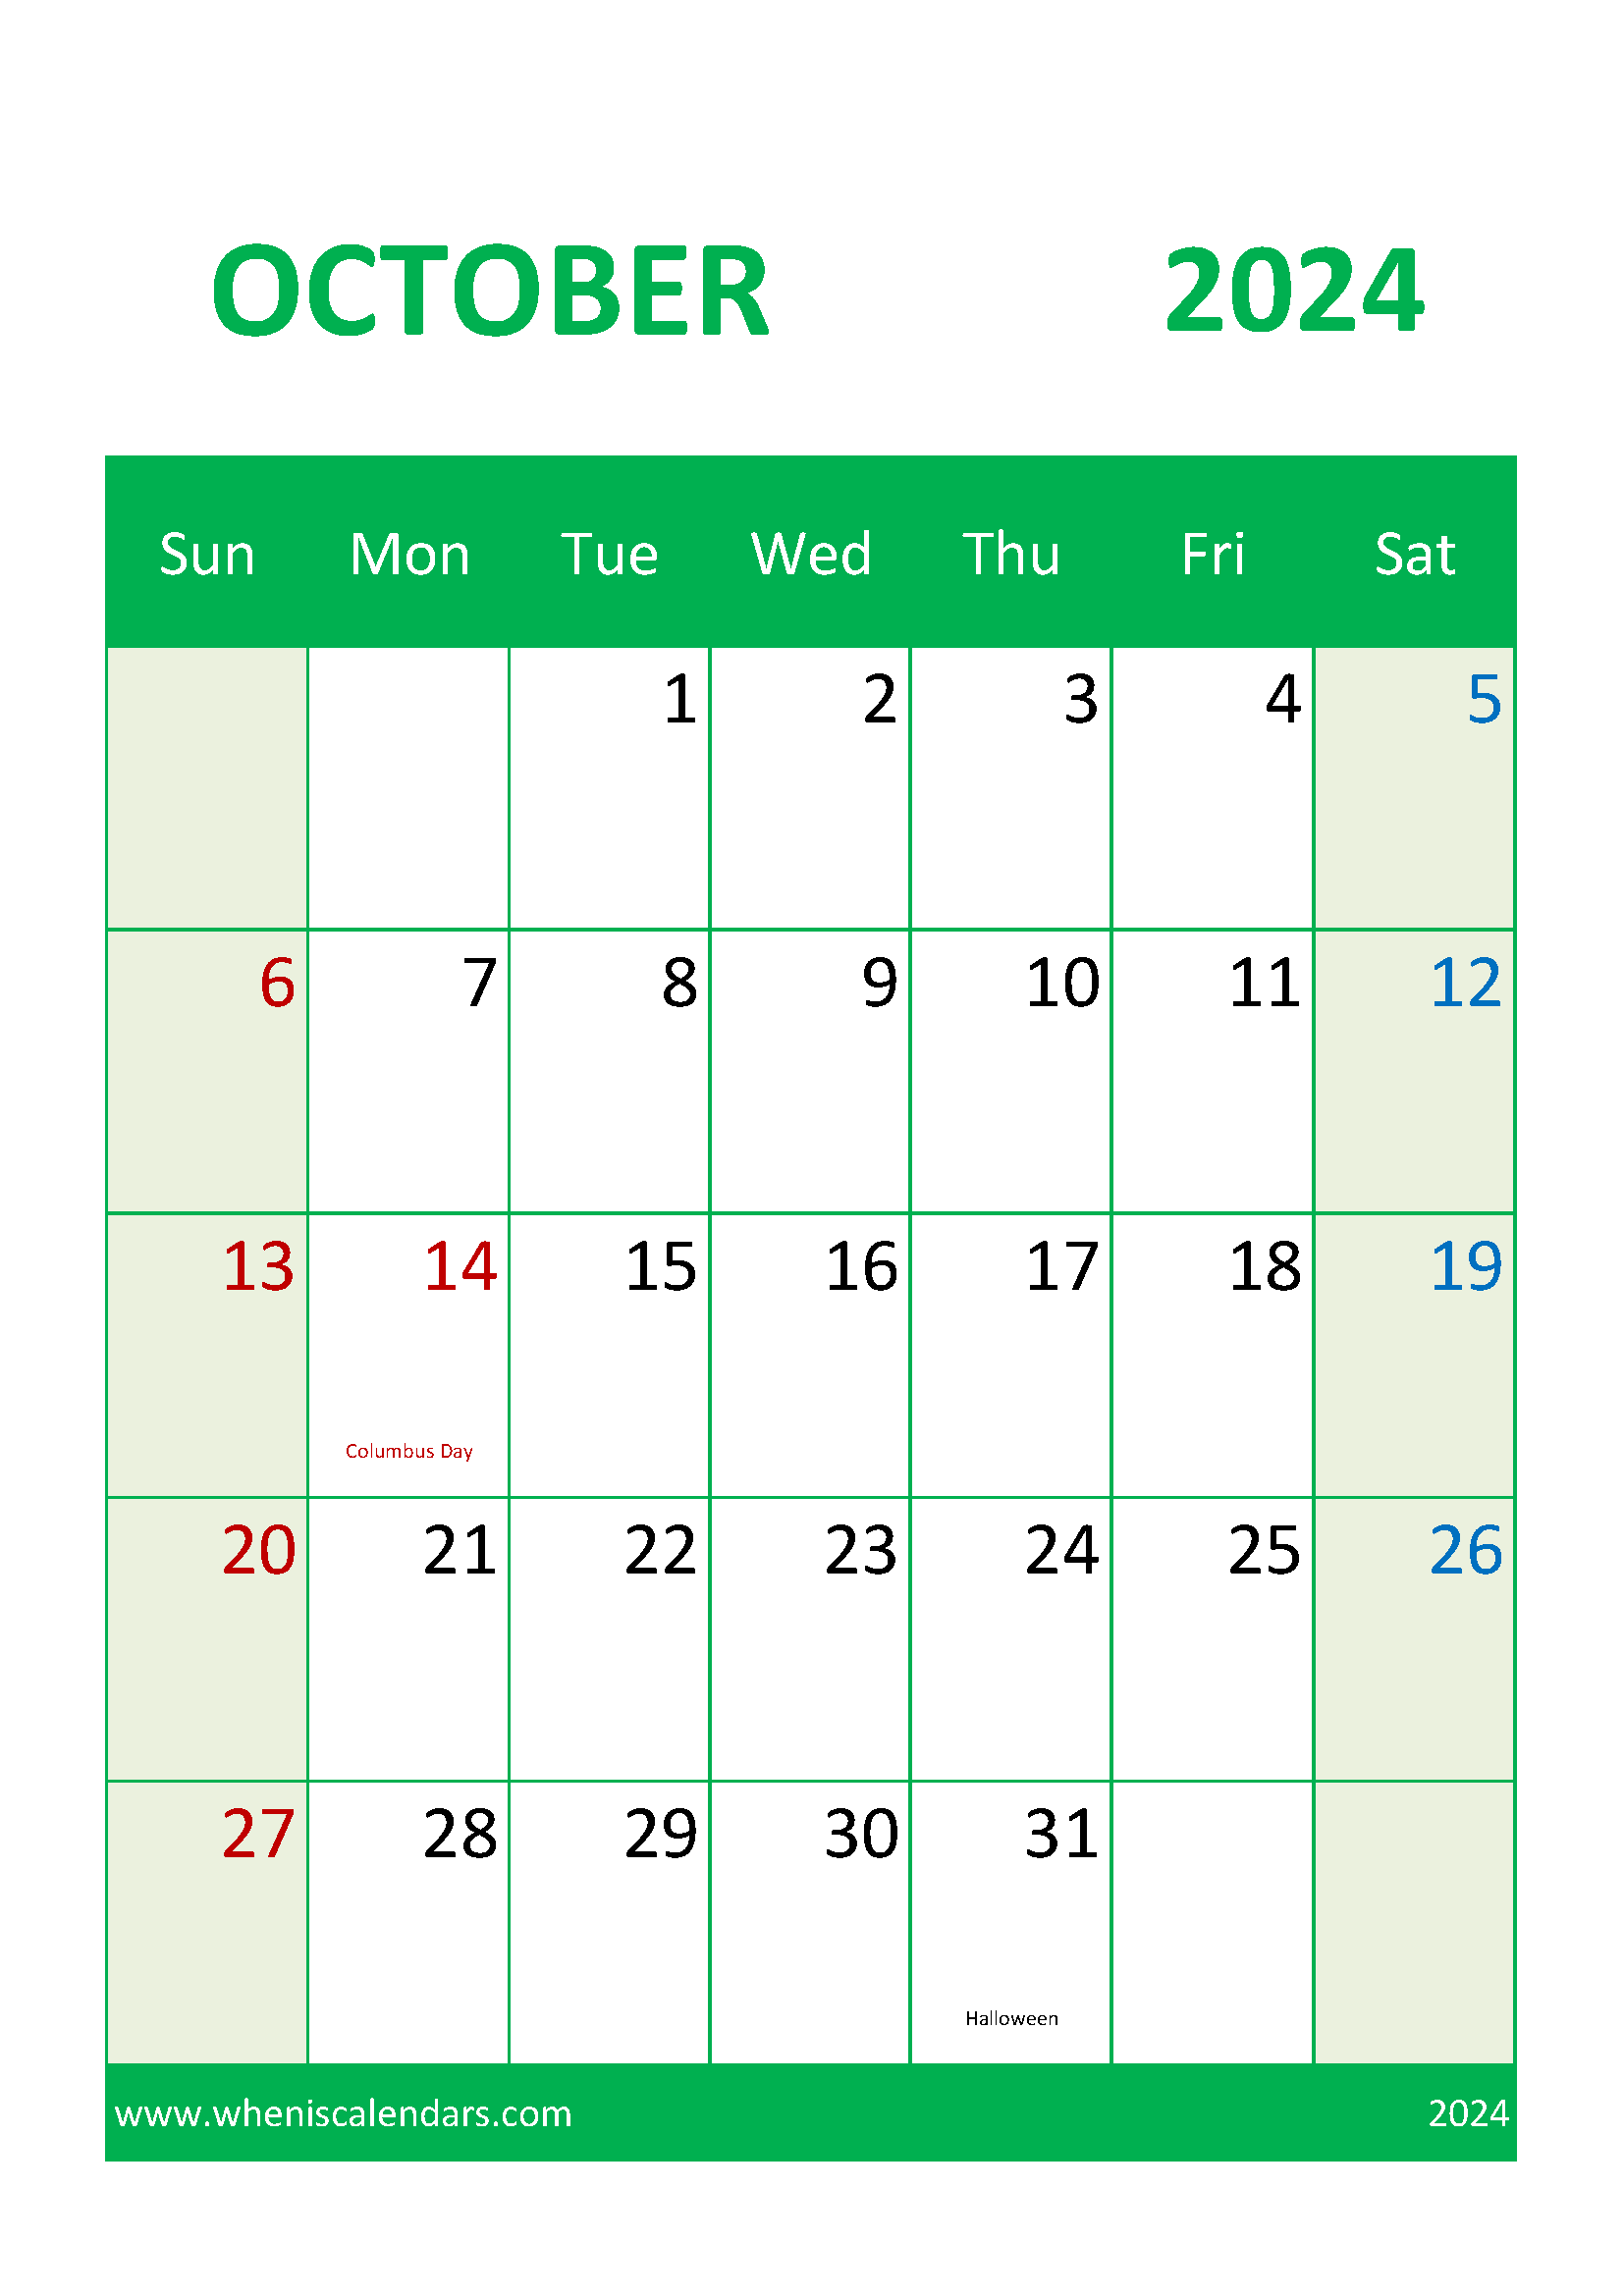 Print Calendar 2024 by Month